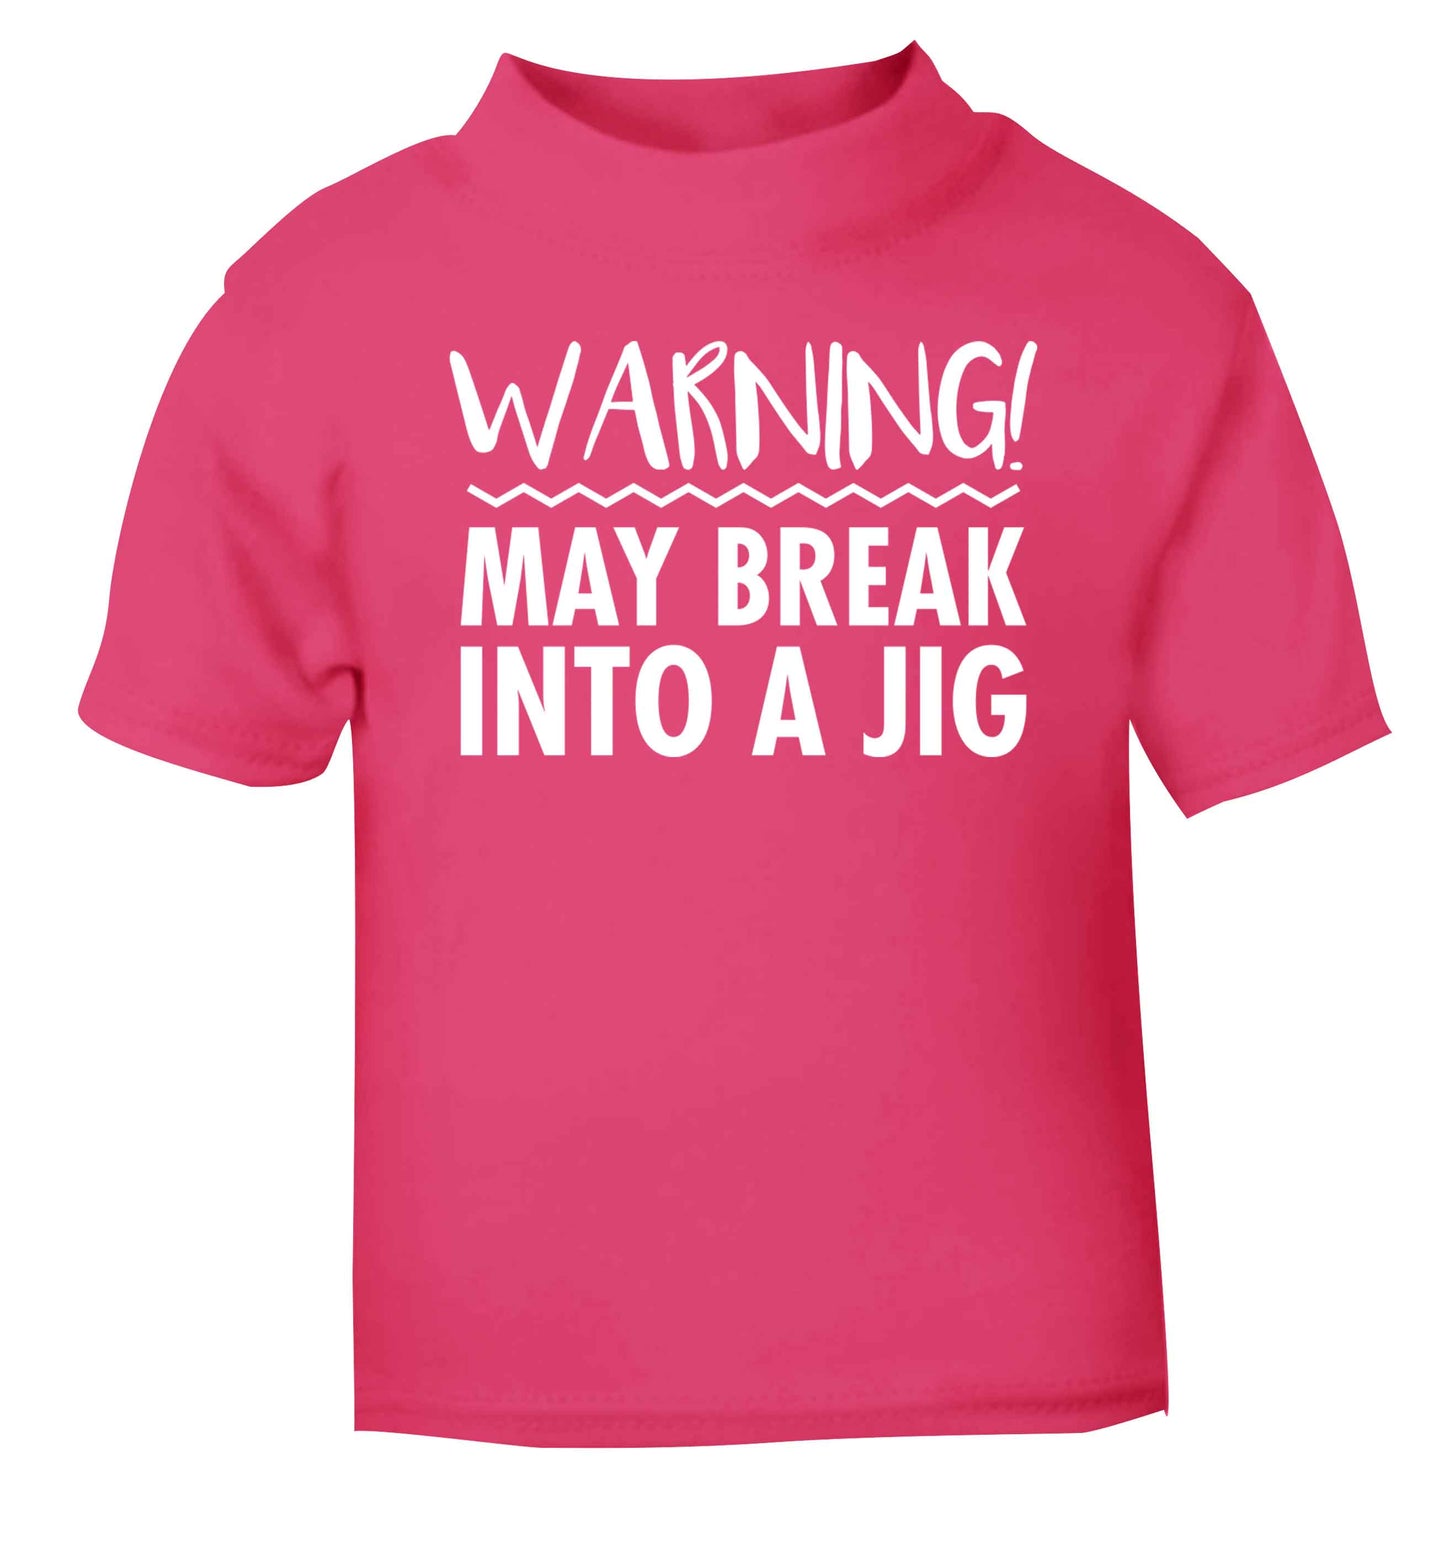 Warning may break into a jig pink baby toddler Tshirt 2 Years